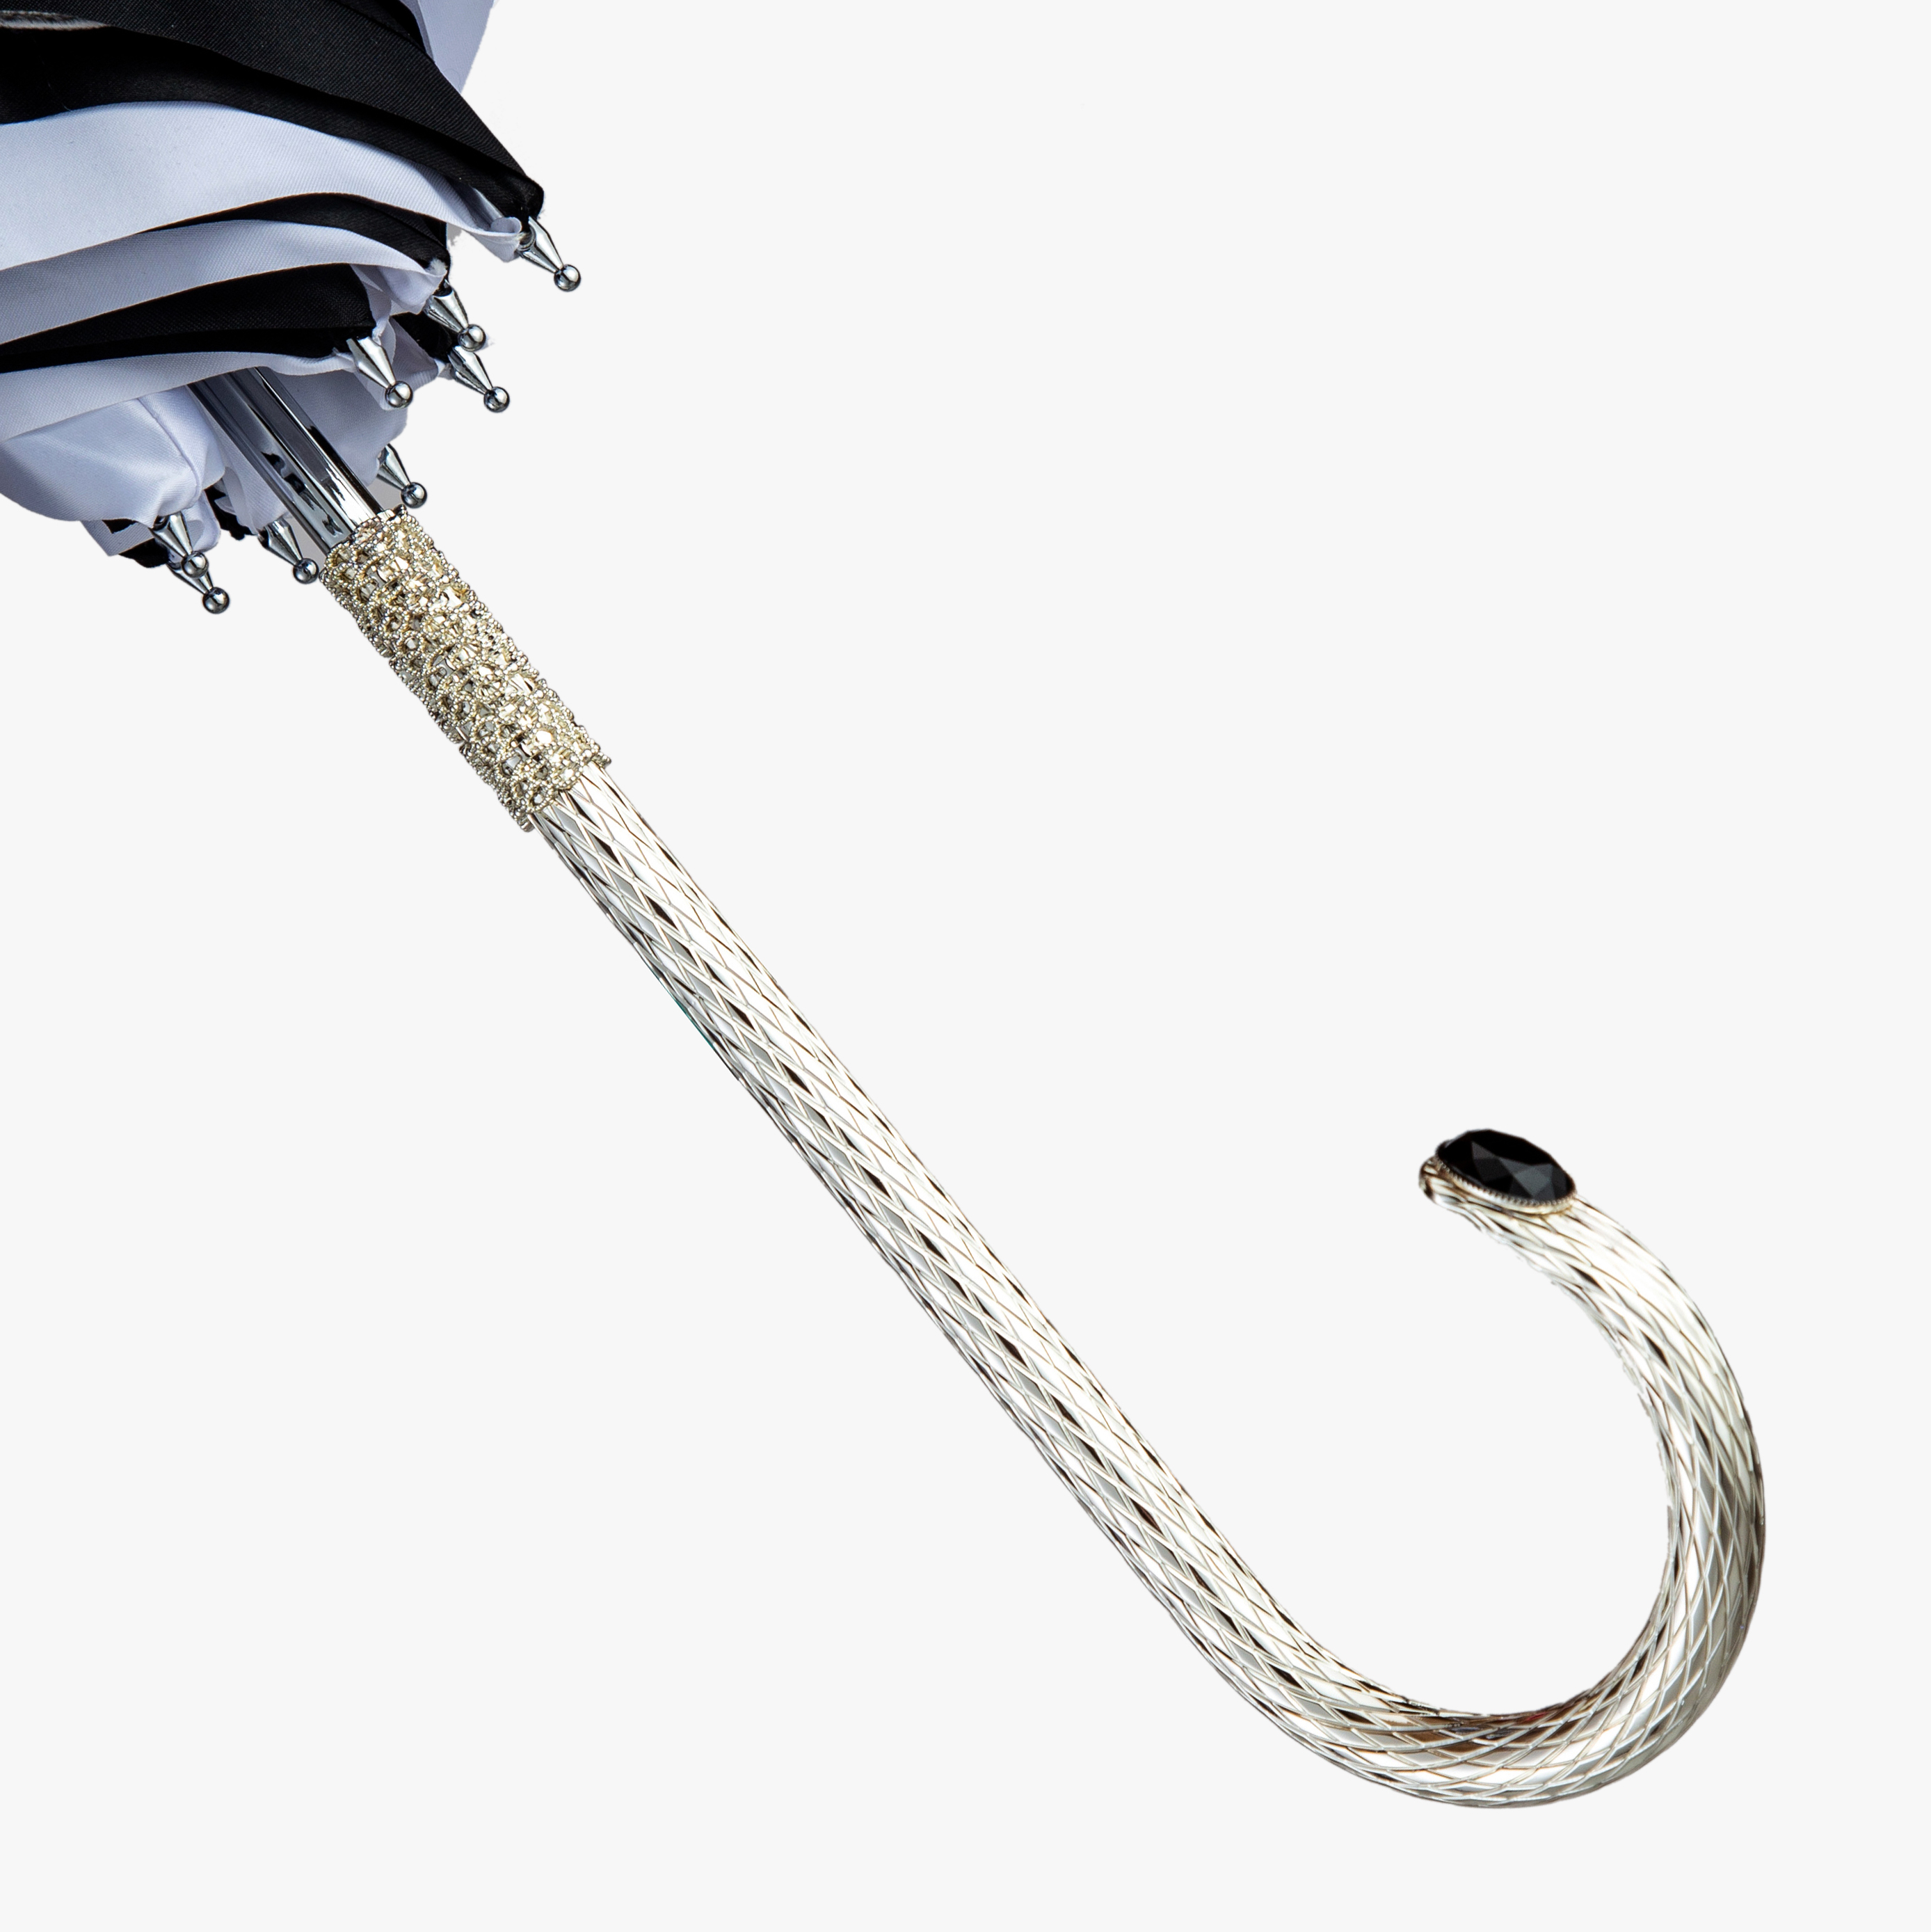 Yirui-duckbill 1 drill elbow-umbrella with long handle